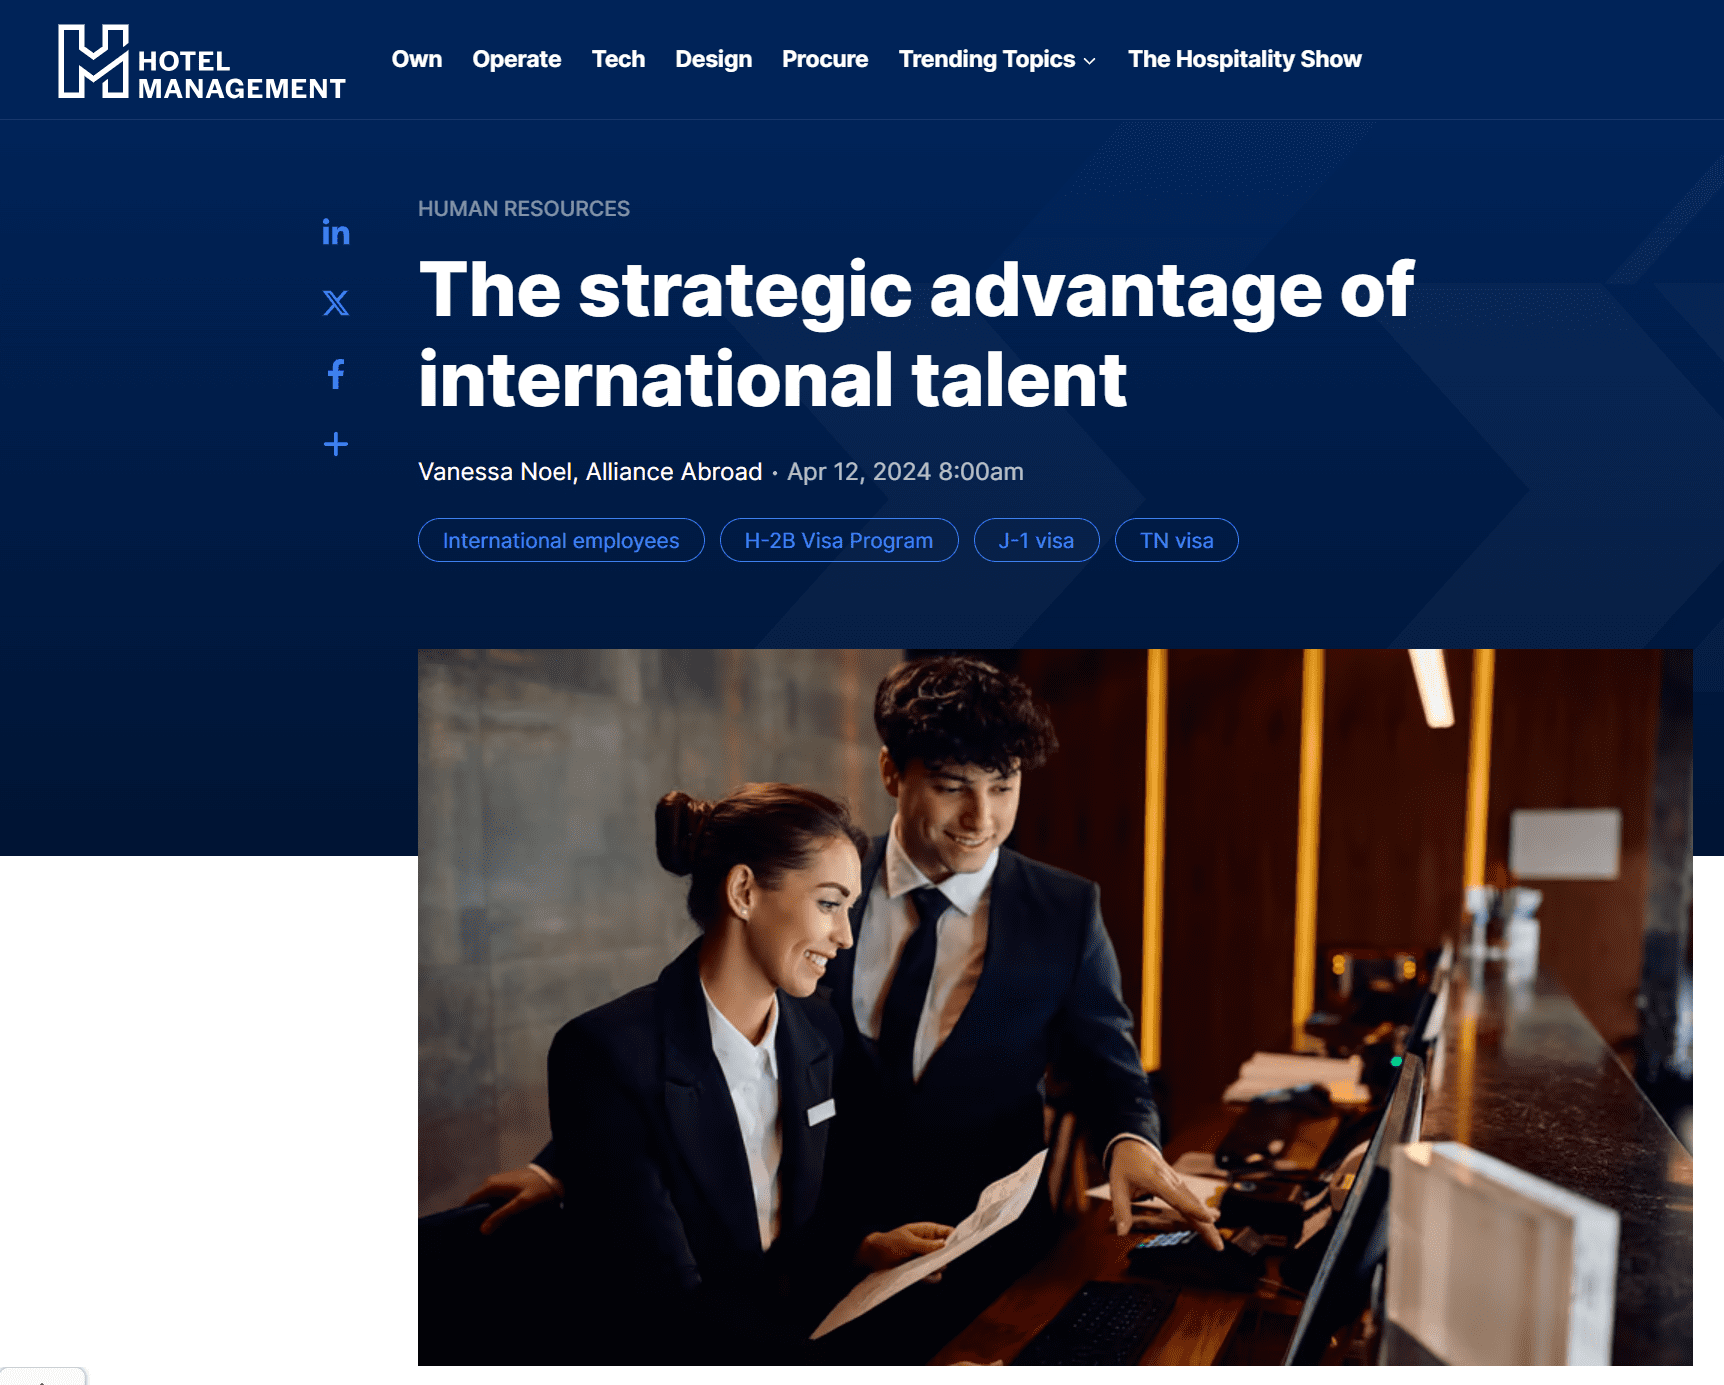 The Strategic Advantage of international talent artículo de Vanessa Noel en Hotel Management Magazine